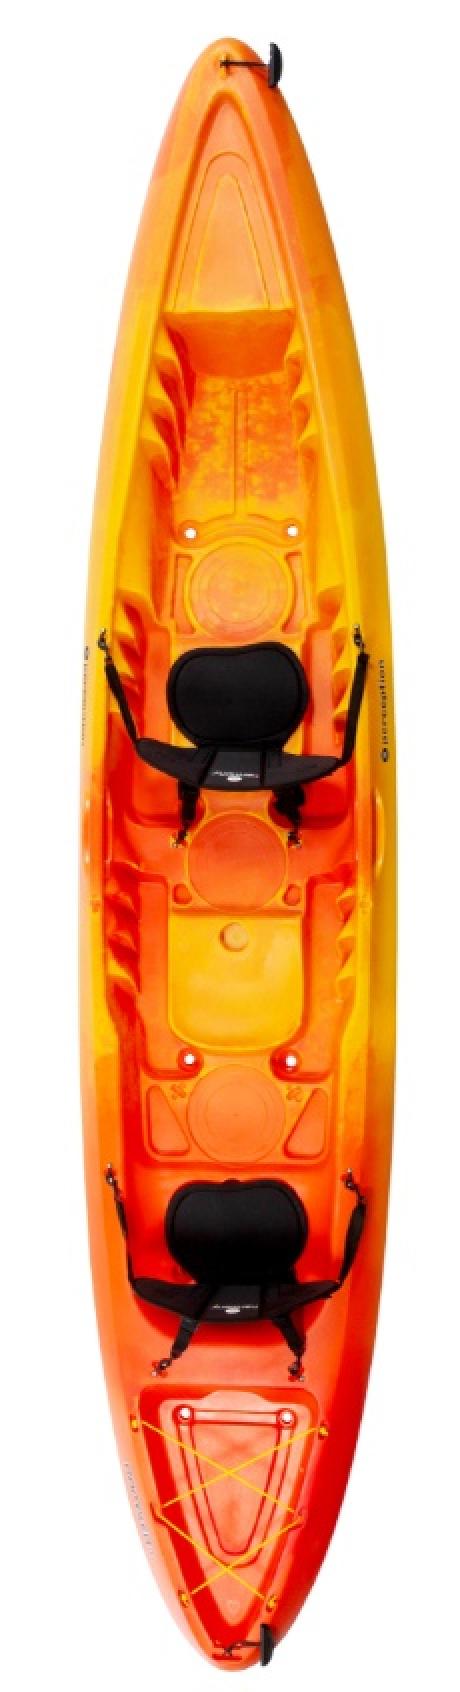 Perception Kayaks Rambler Tandem 13.5T